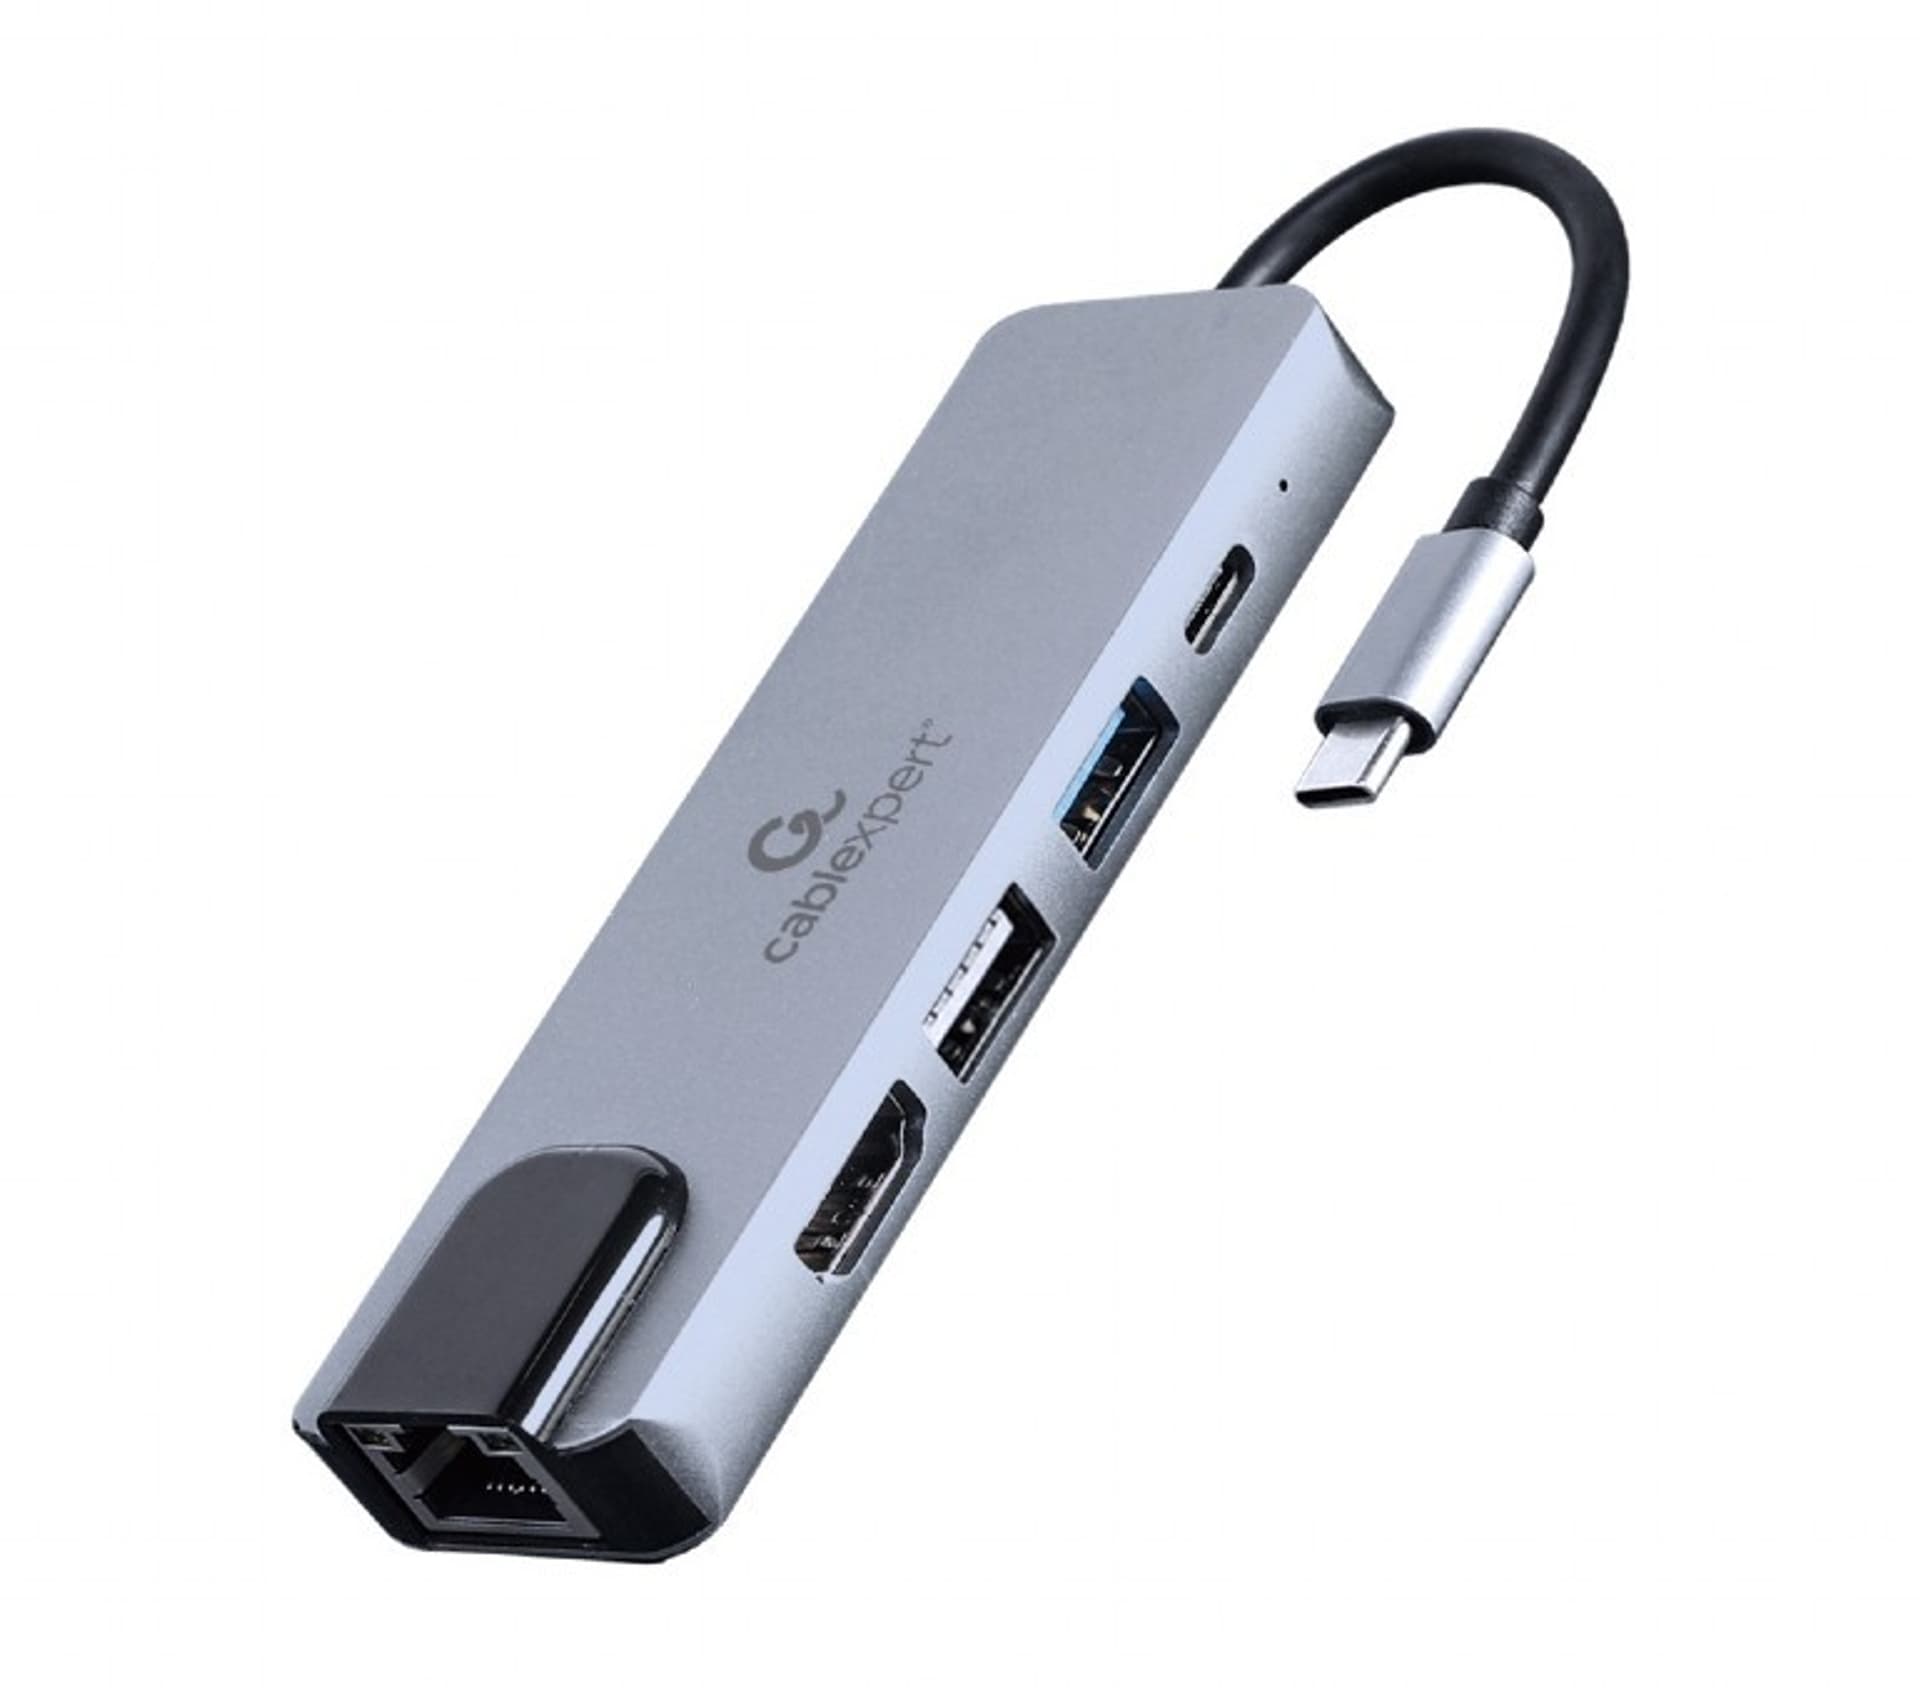 Adapter wieloportowy USB-C 5w1, PD, HDMI, USB 3.1, USB 2.0, LAN